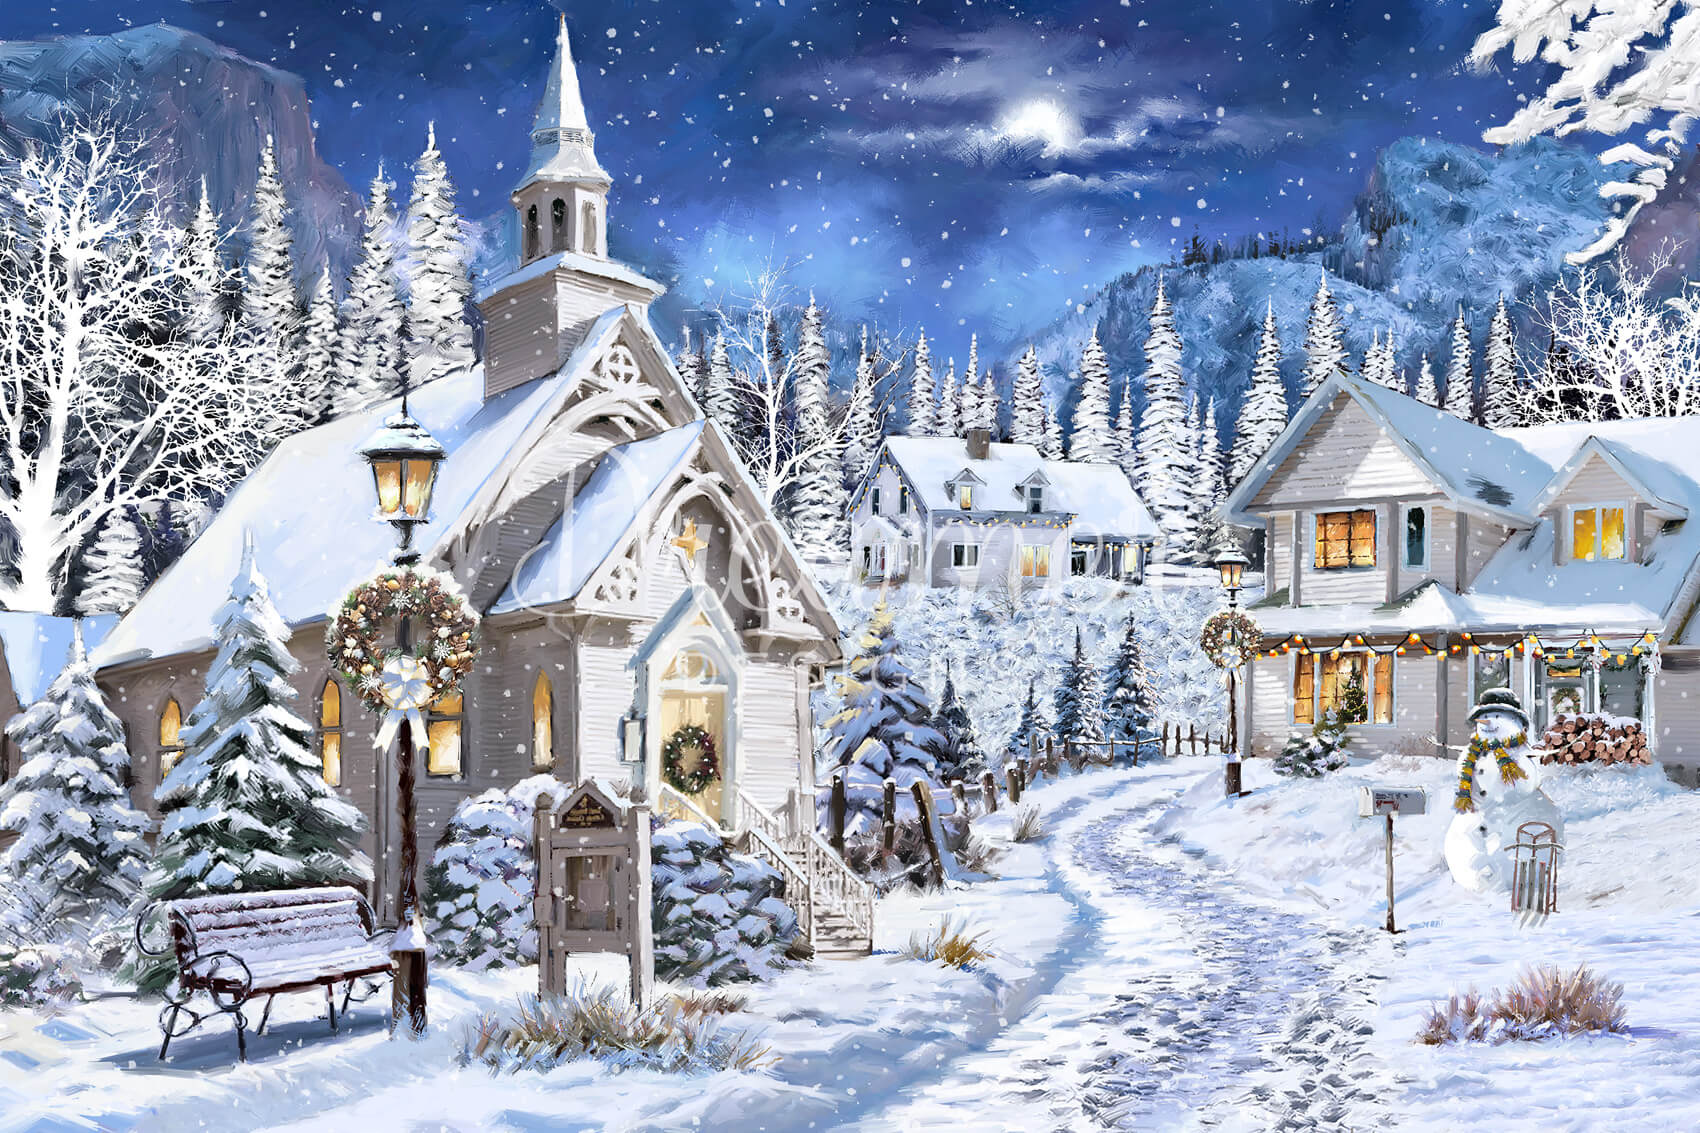 Winter Wonderland Chapel